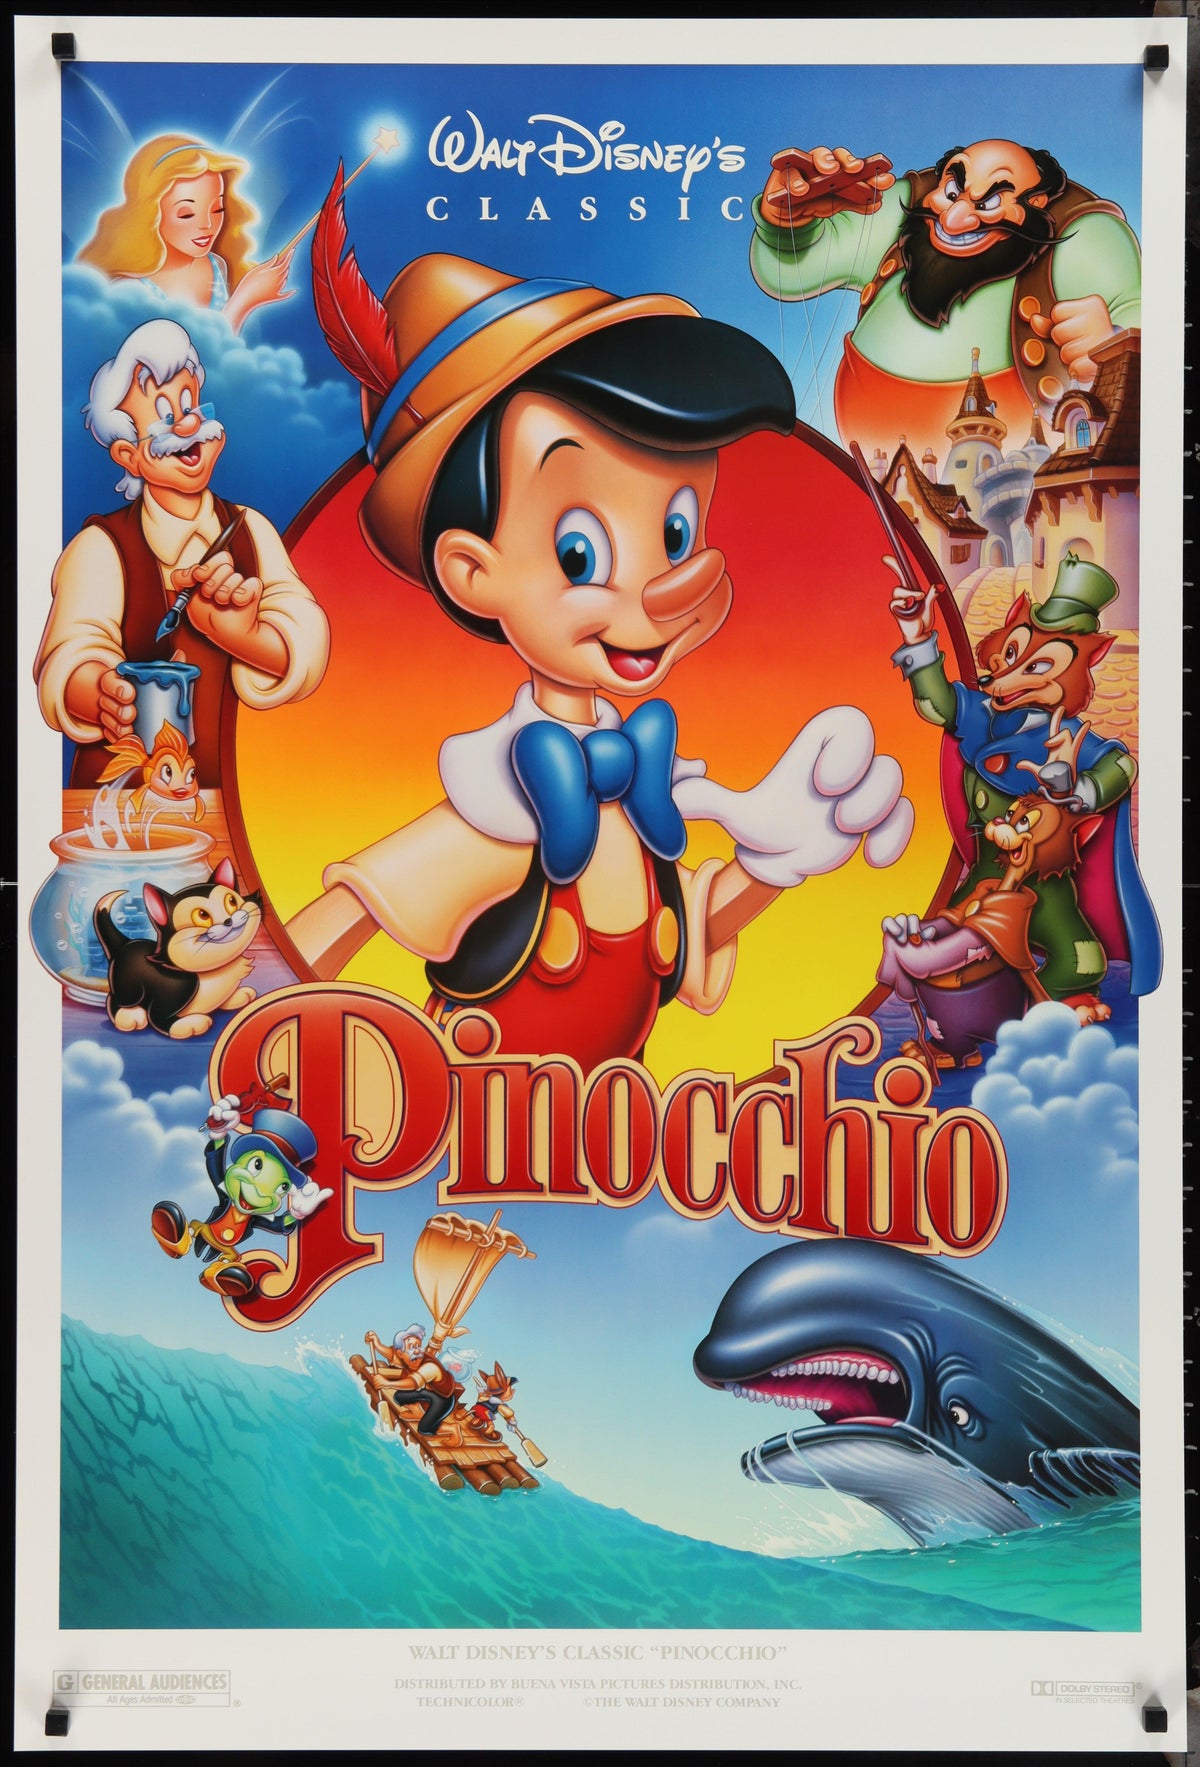 Pinocchio 1 Sheet (27x41) Original Vintage Movie Poster